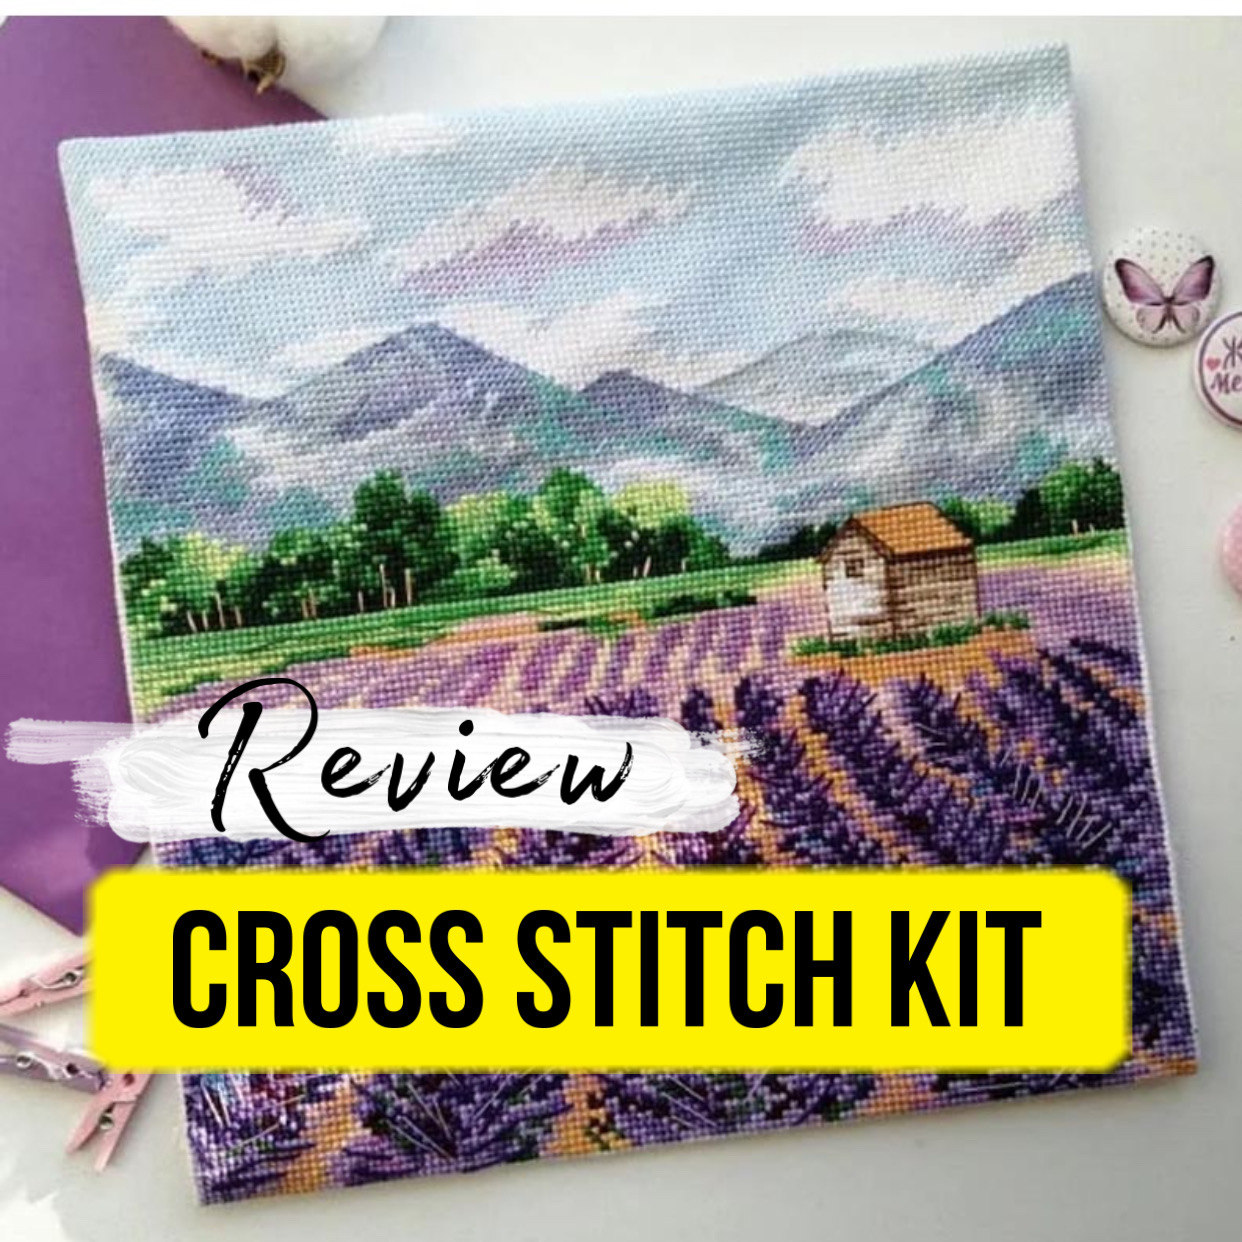 “Provence” cross stitch kit review